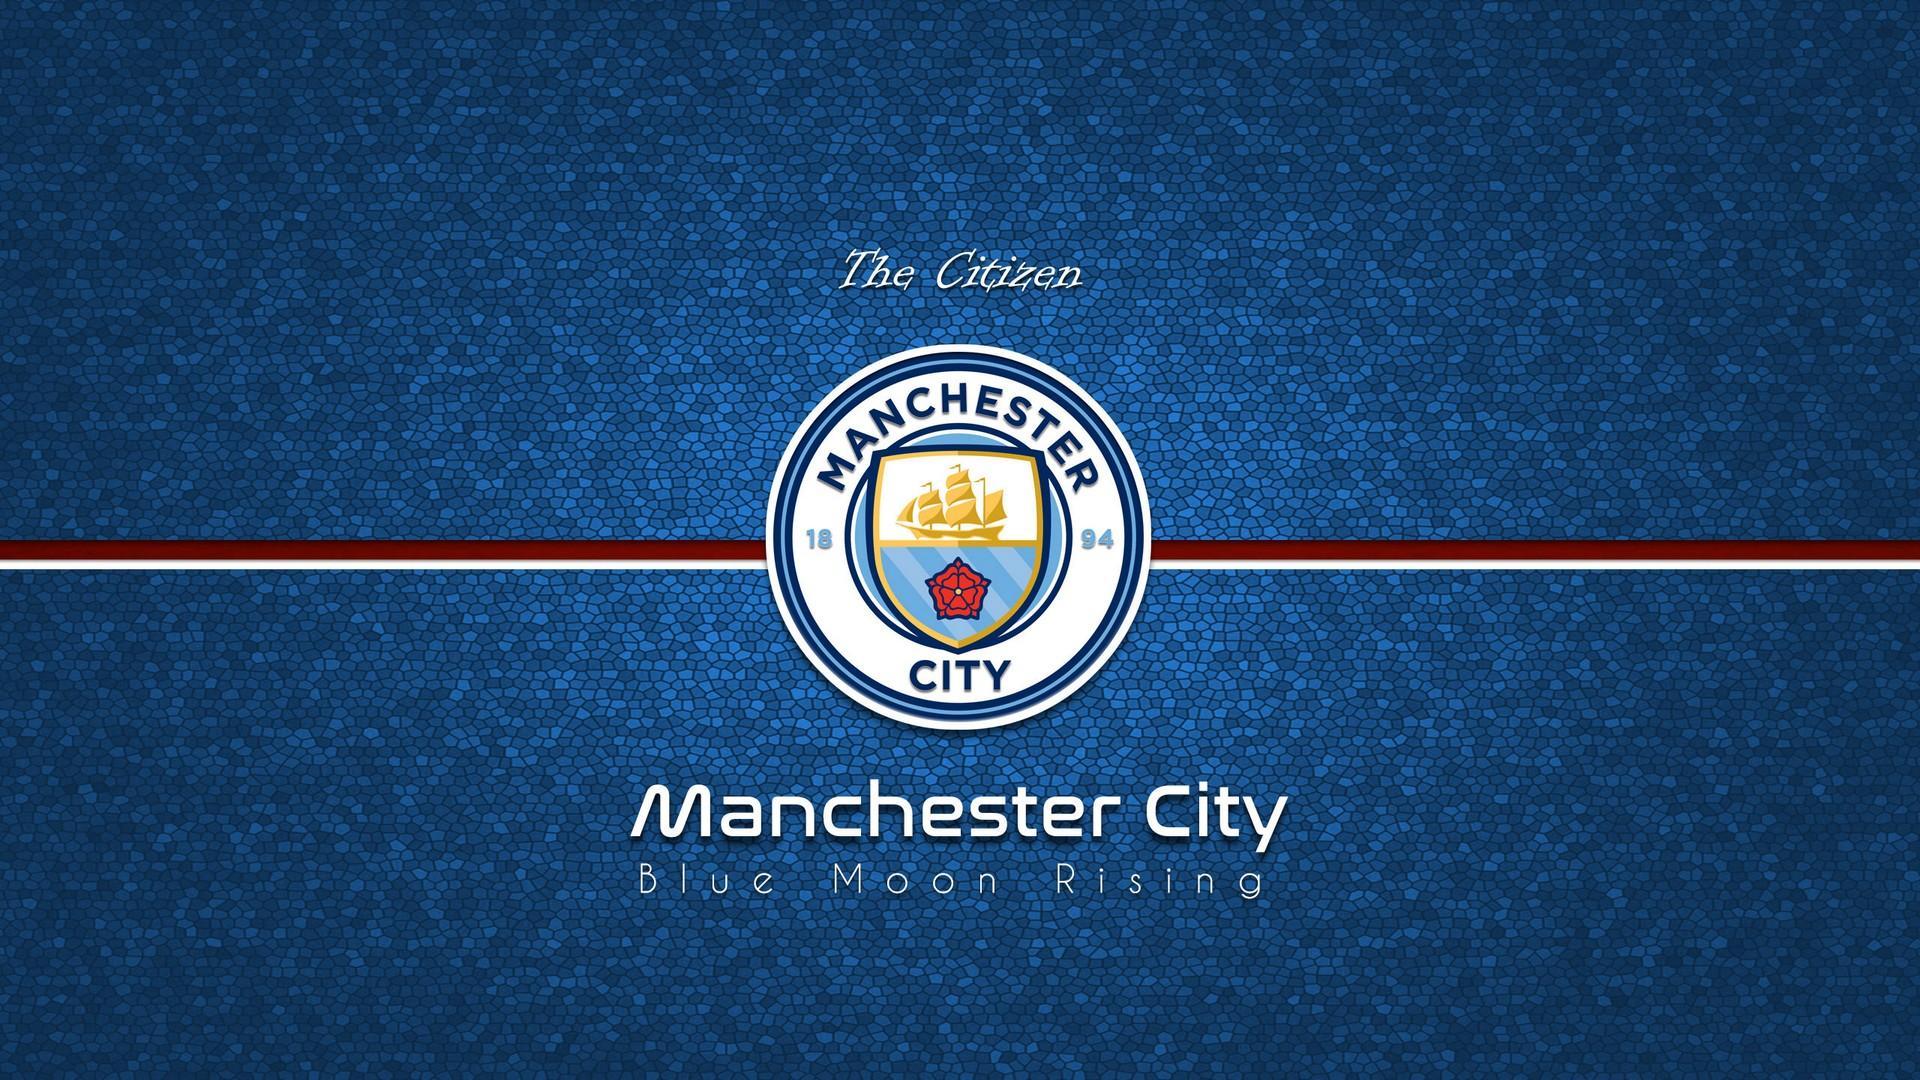 Free Manchester City Logo Wallpaper Downloads 200 Manchester City Logo  Wallpapers for FREE  Wallpaperscom